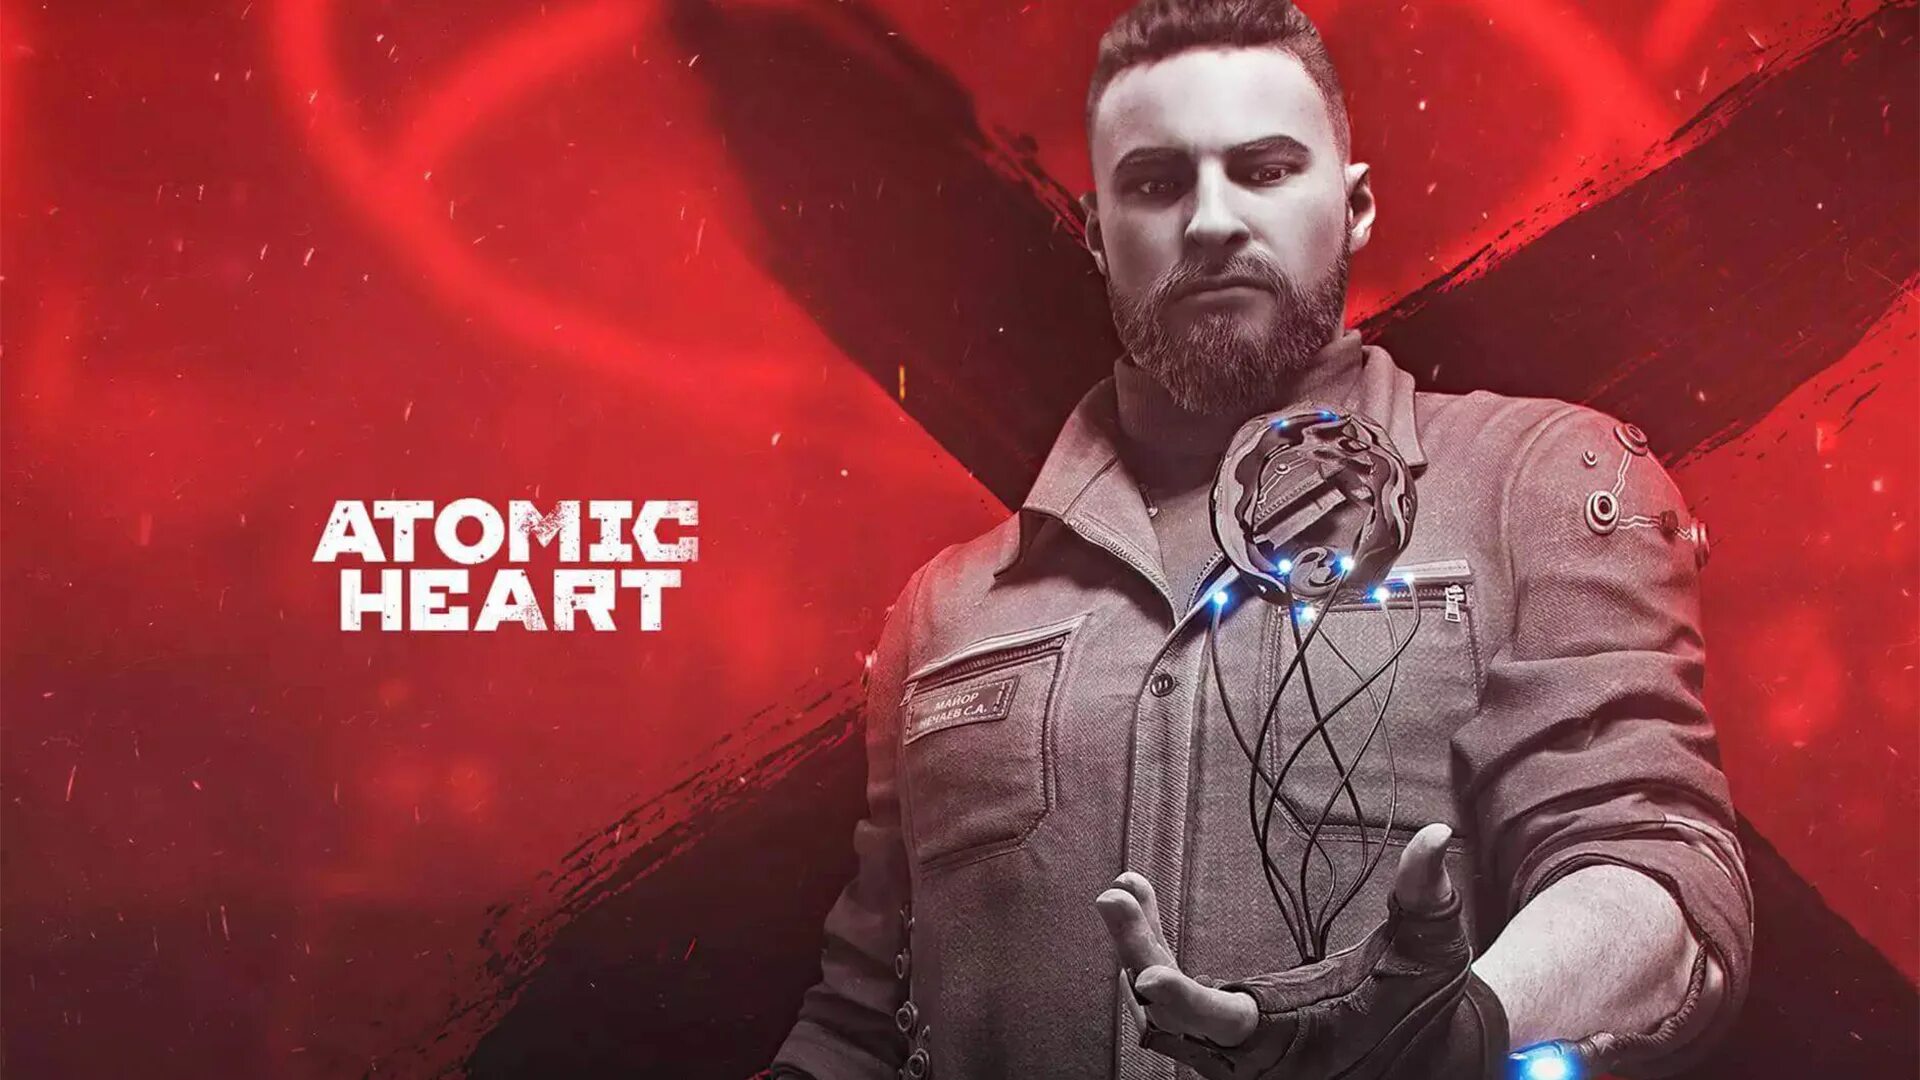 Томик харт. Атомик Харт. Atomic Heart обложка 2022.